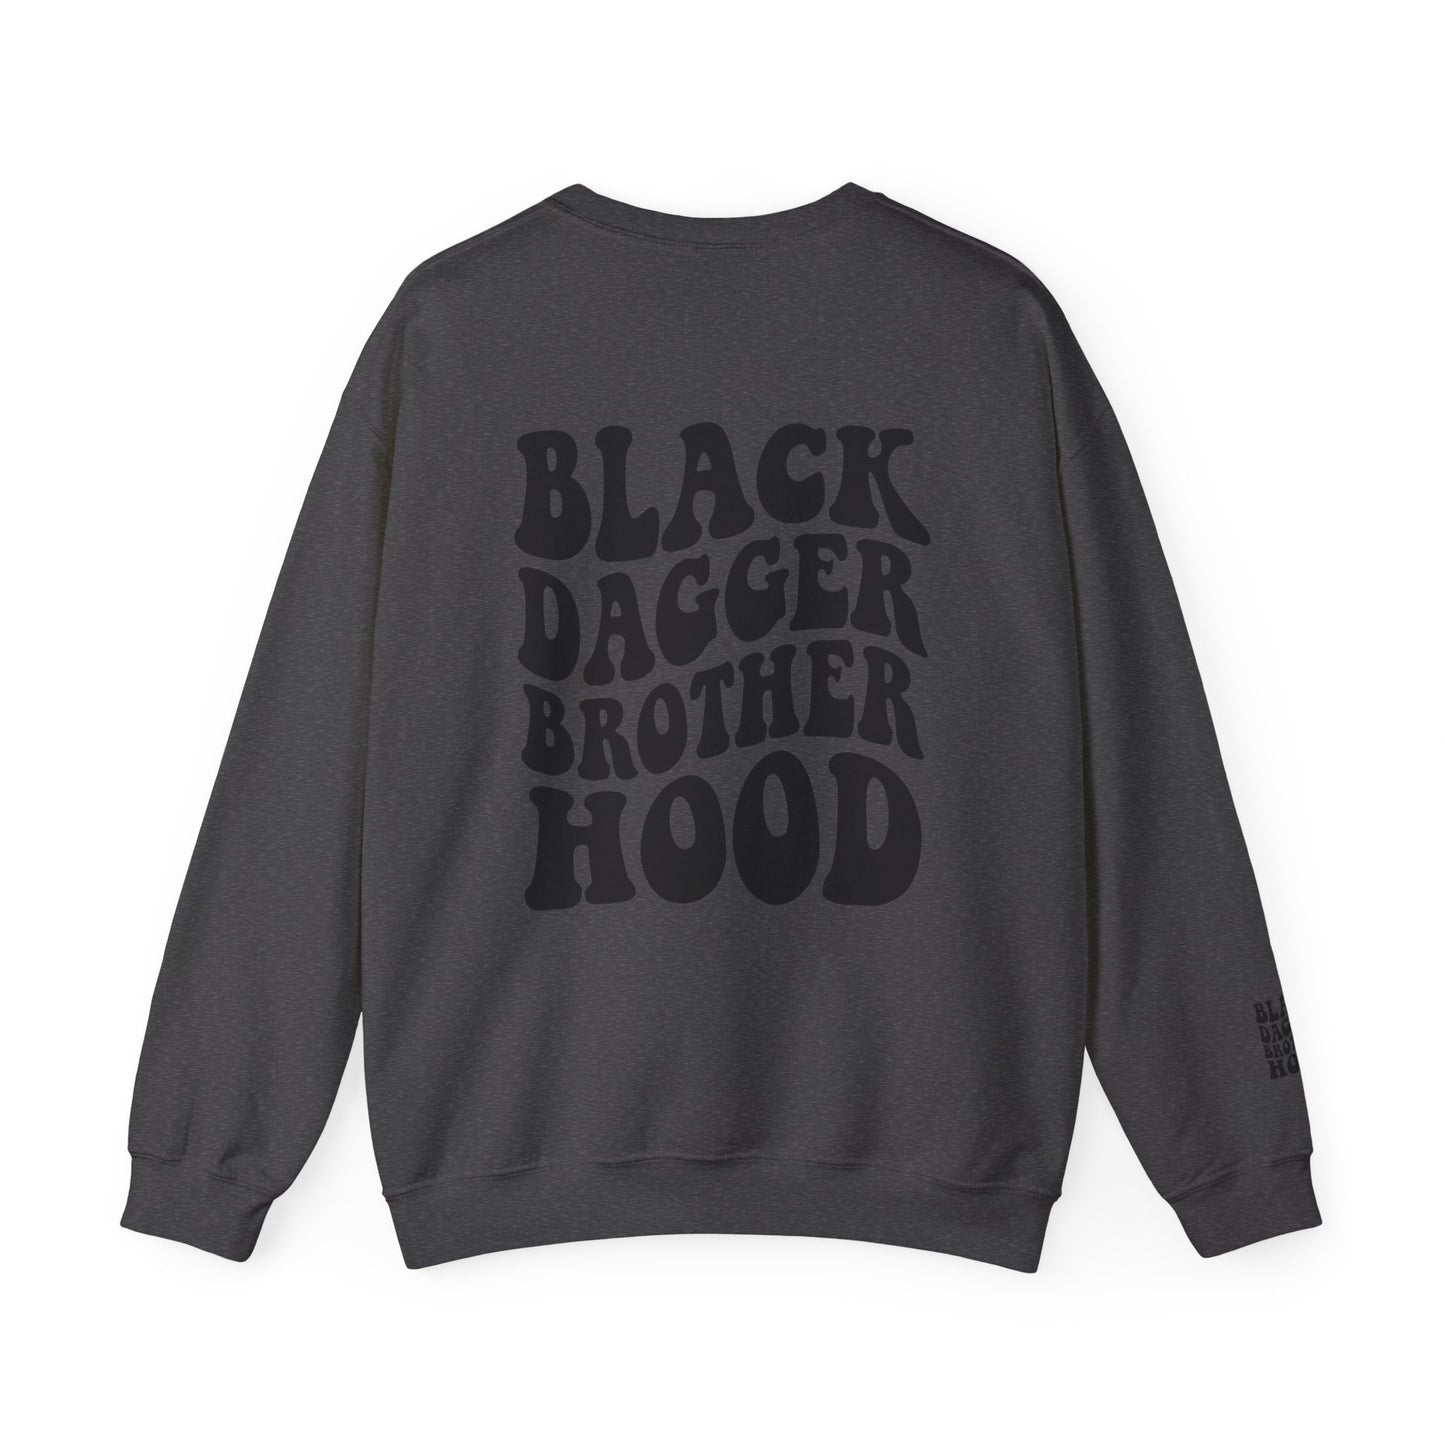 Black Dagger Brotherhood Crewneck Sweatshirt Pullover